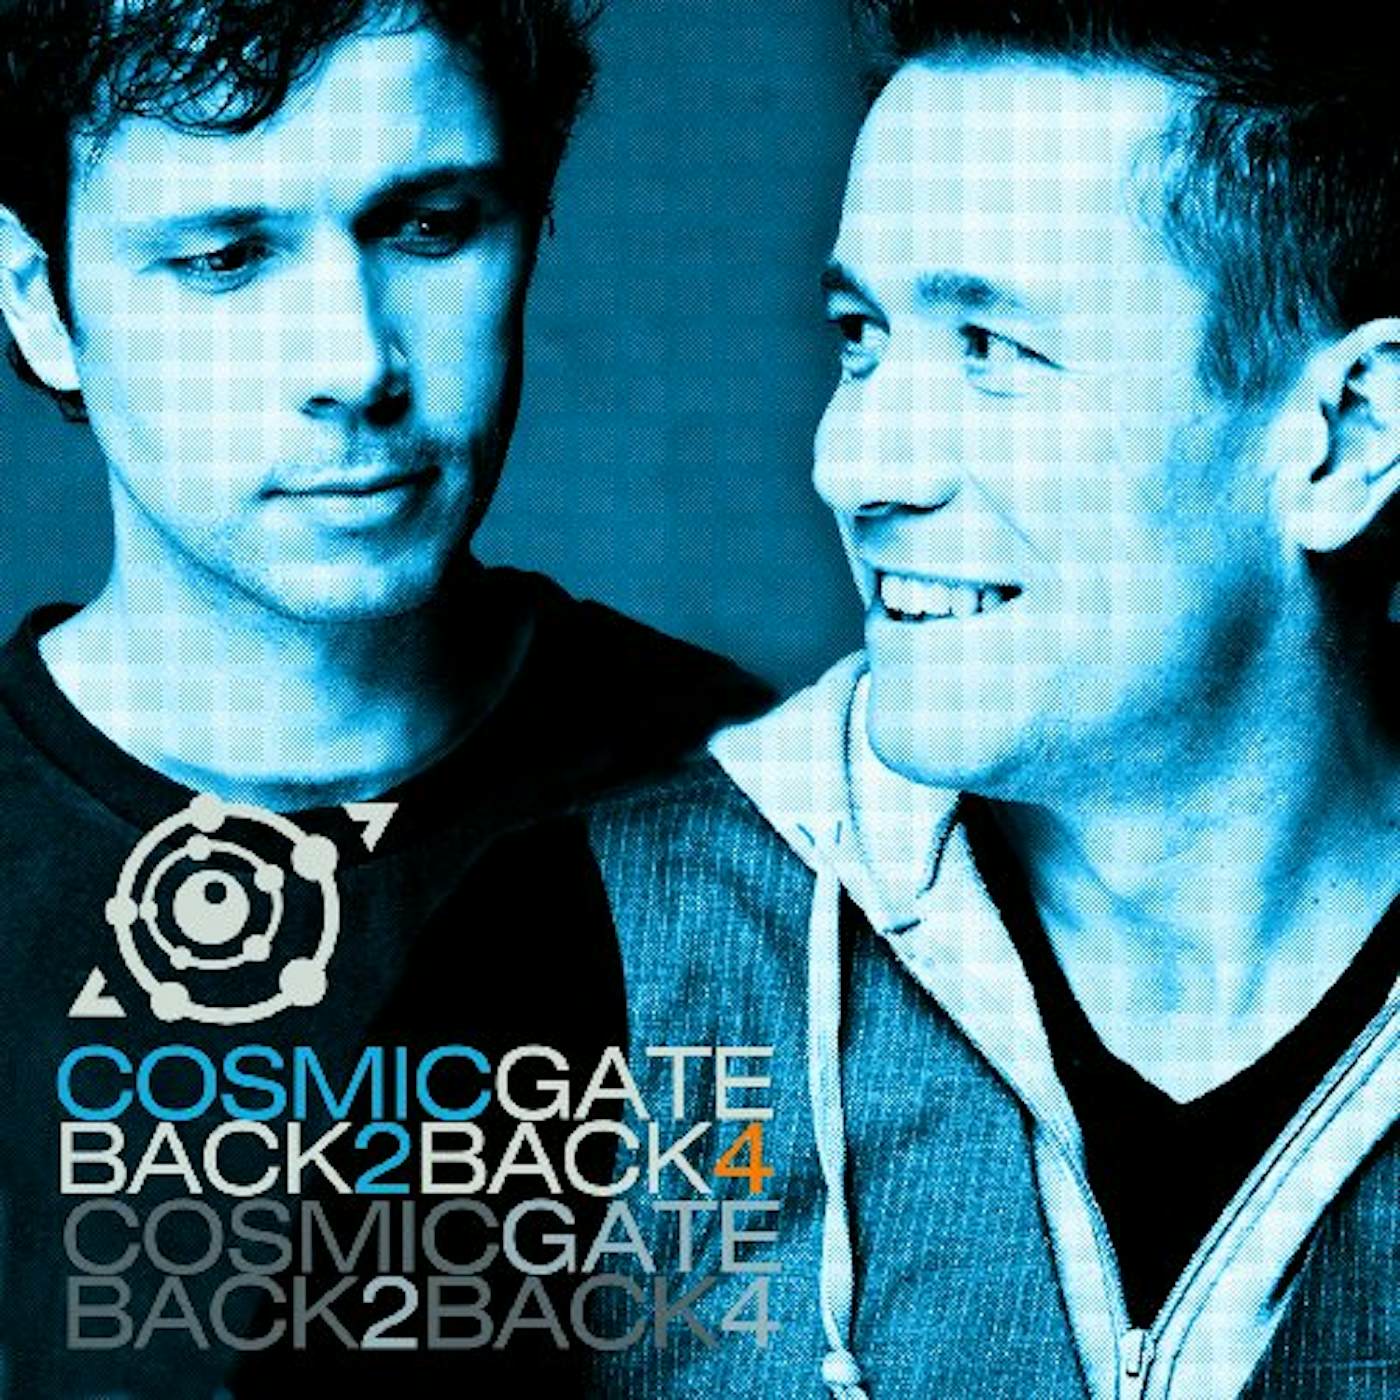 Cosmic Gate BACK TO BACK 4 CD